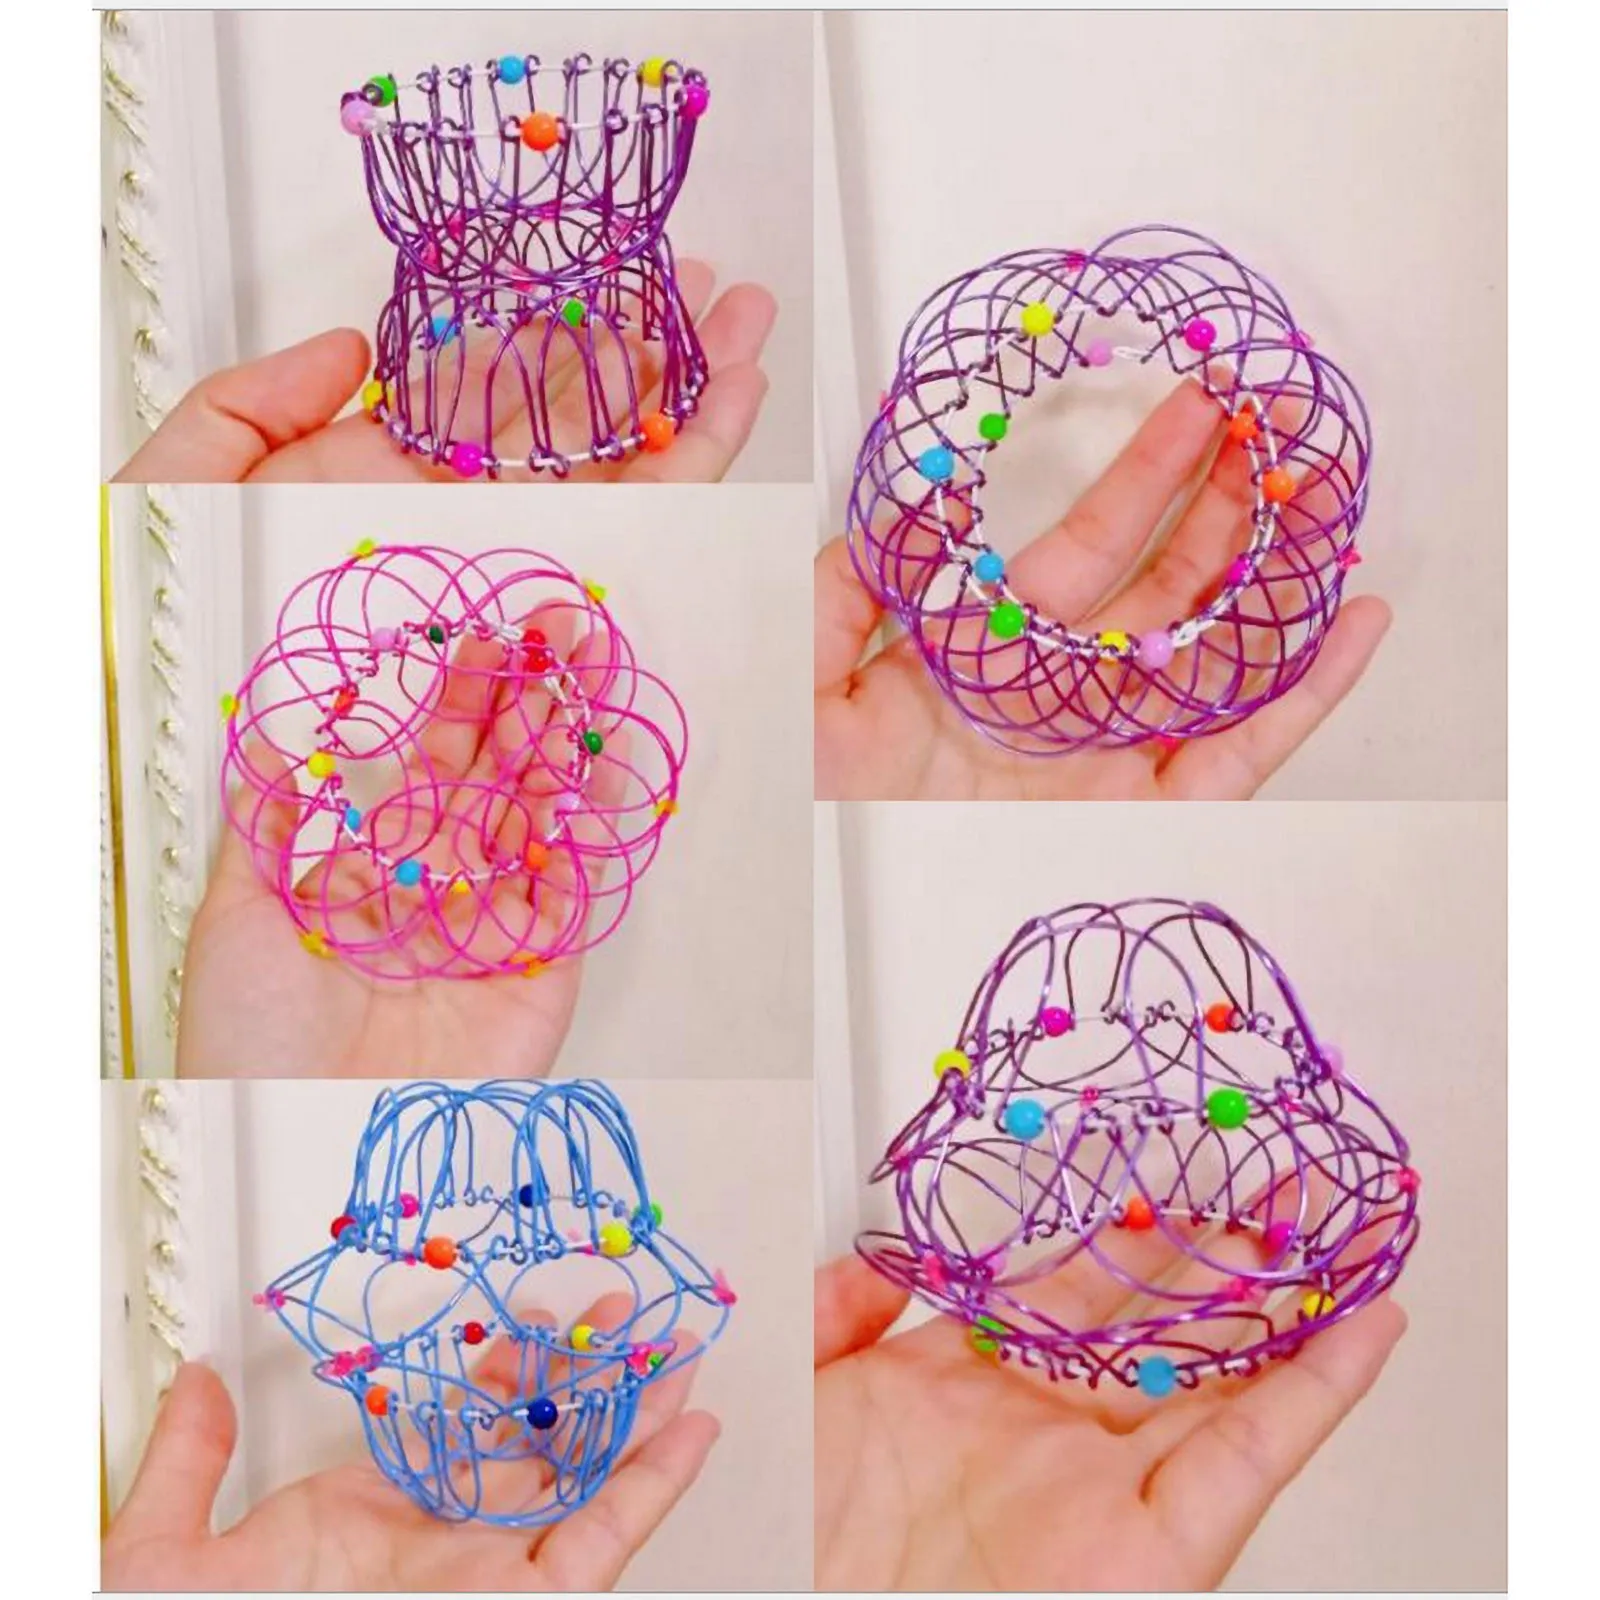 Details about   Decompression Deformation Soft Flower Basket Hoop Magic Flow Ring Toys Kid Gifts 